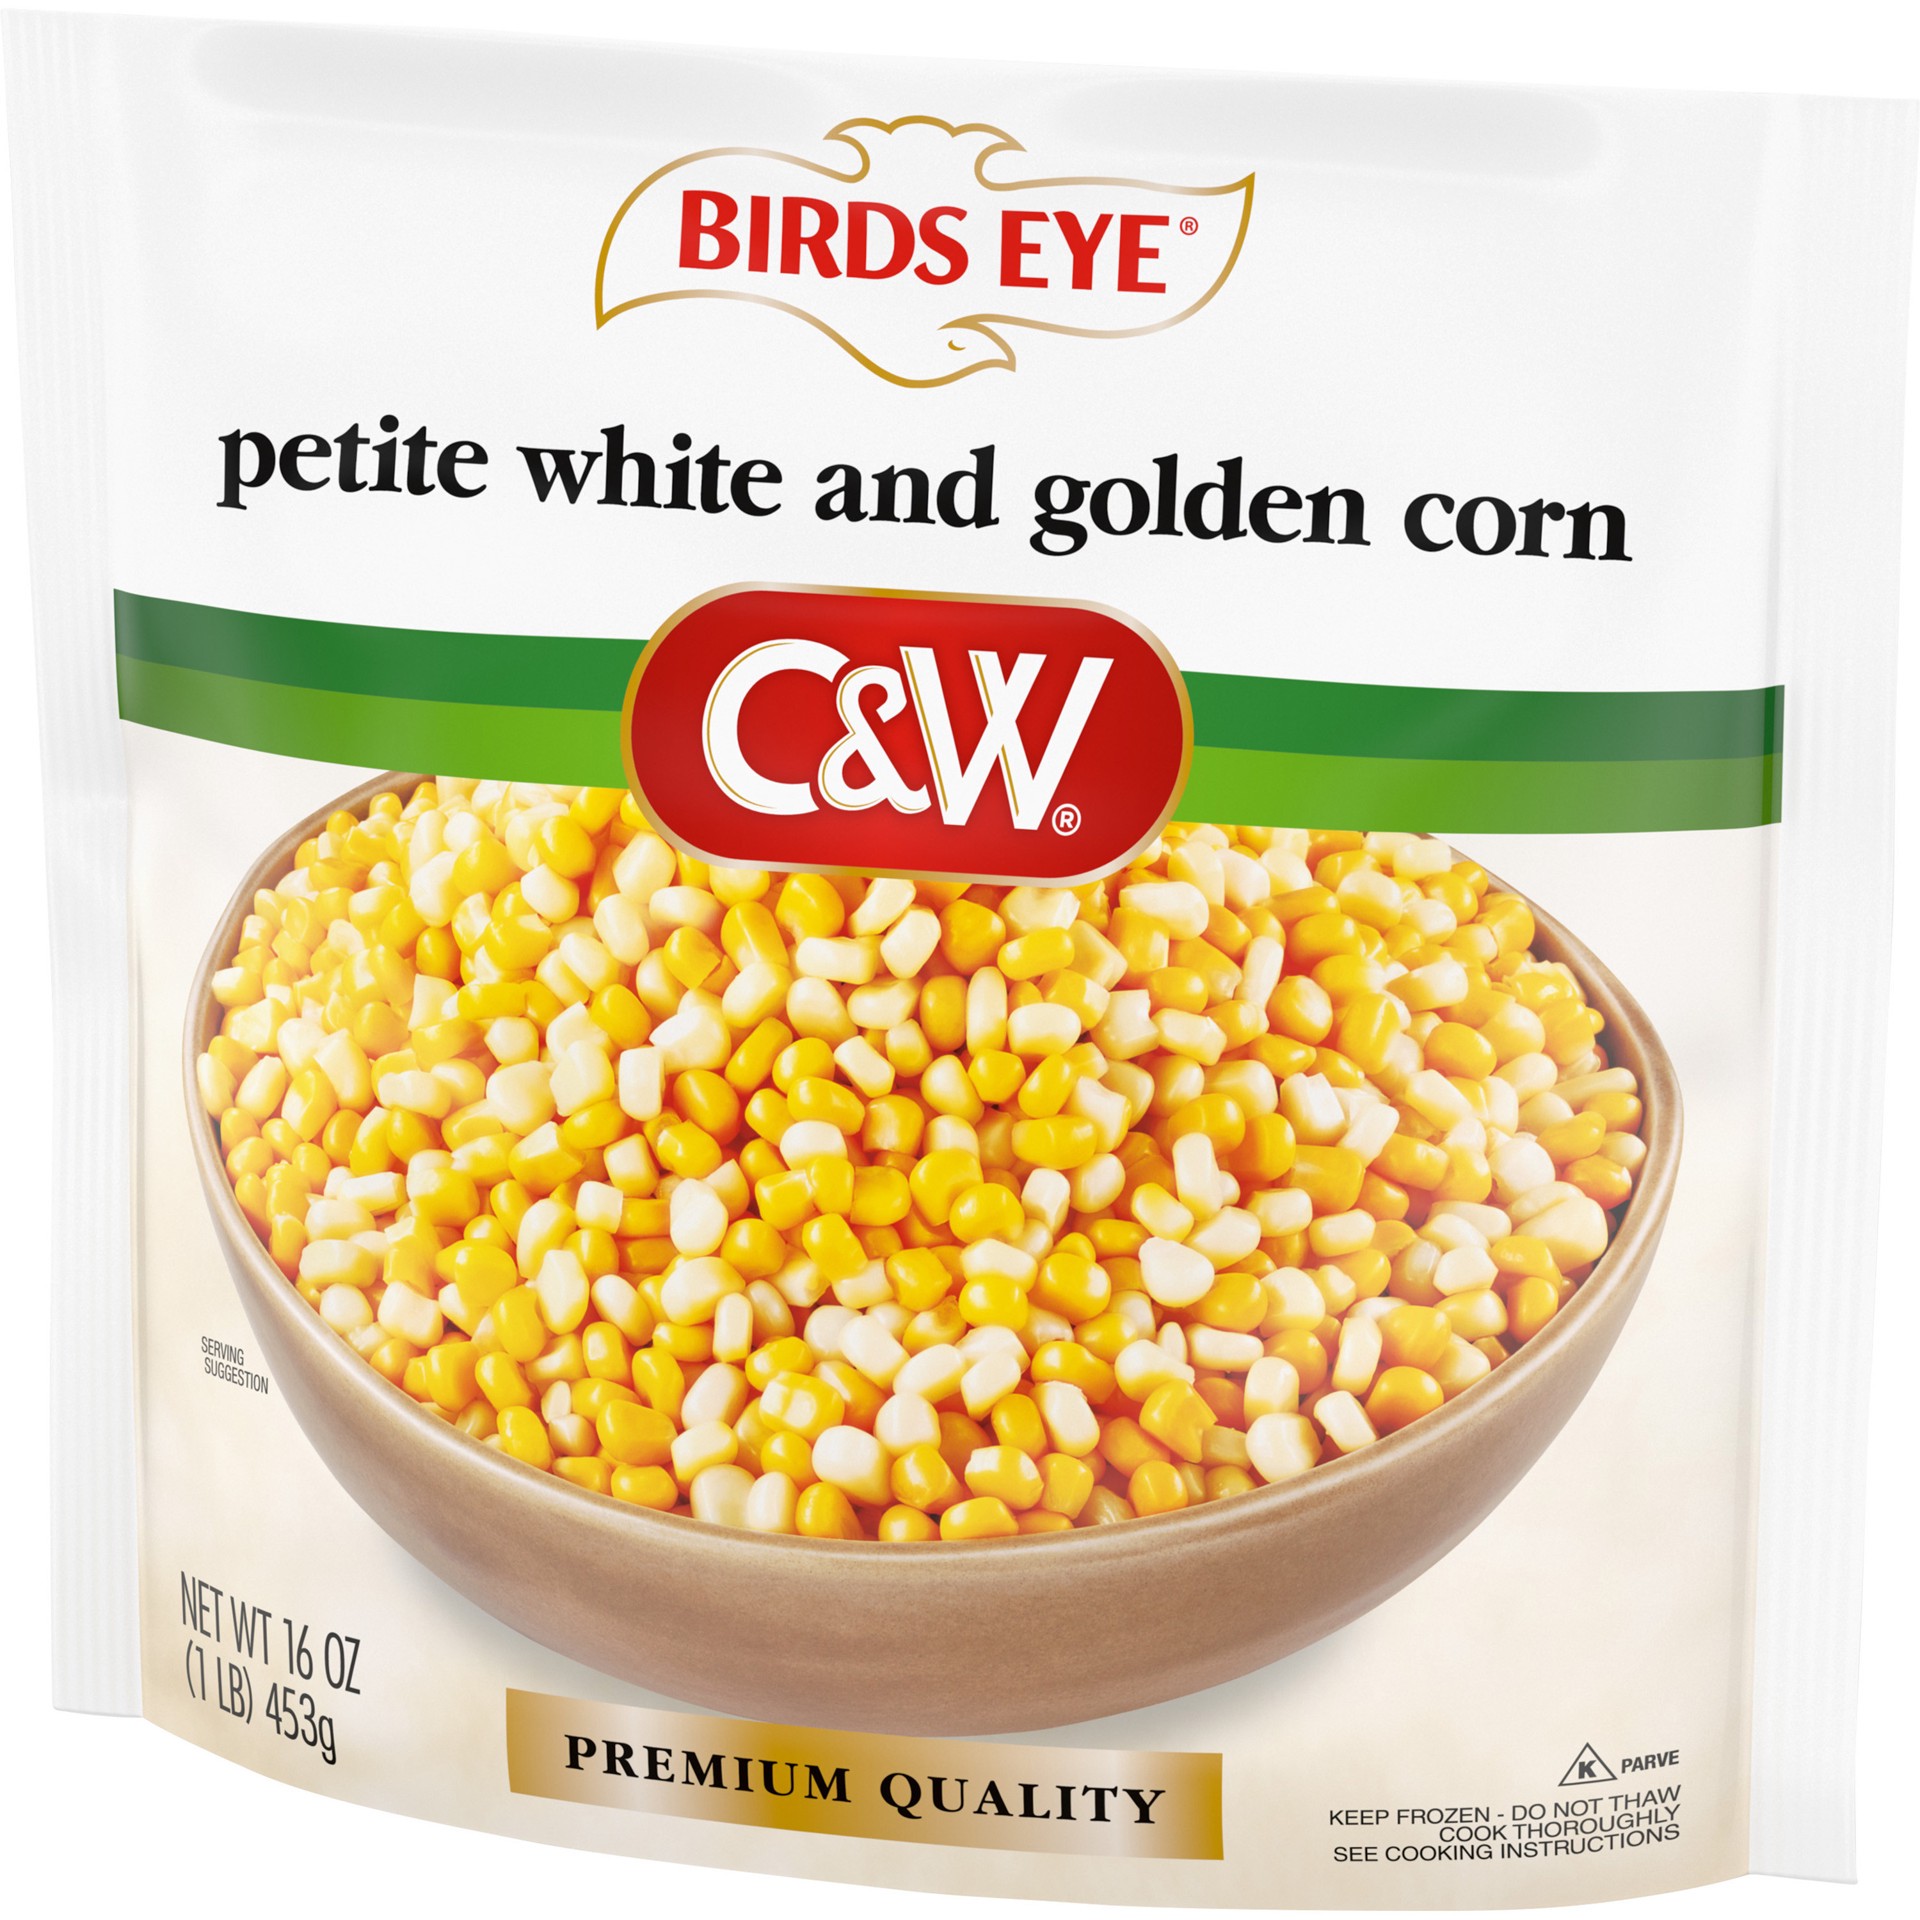 slide 3 of 5, Birds Eye C&W Petite White and Golden Corn 16 oz, 16 oz